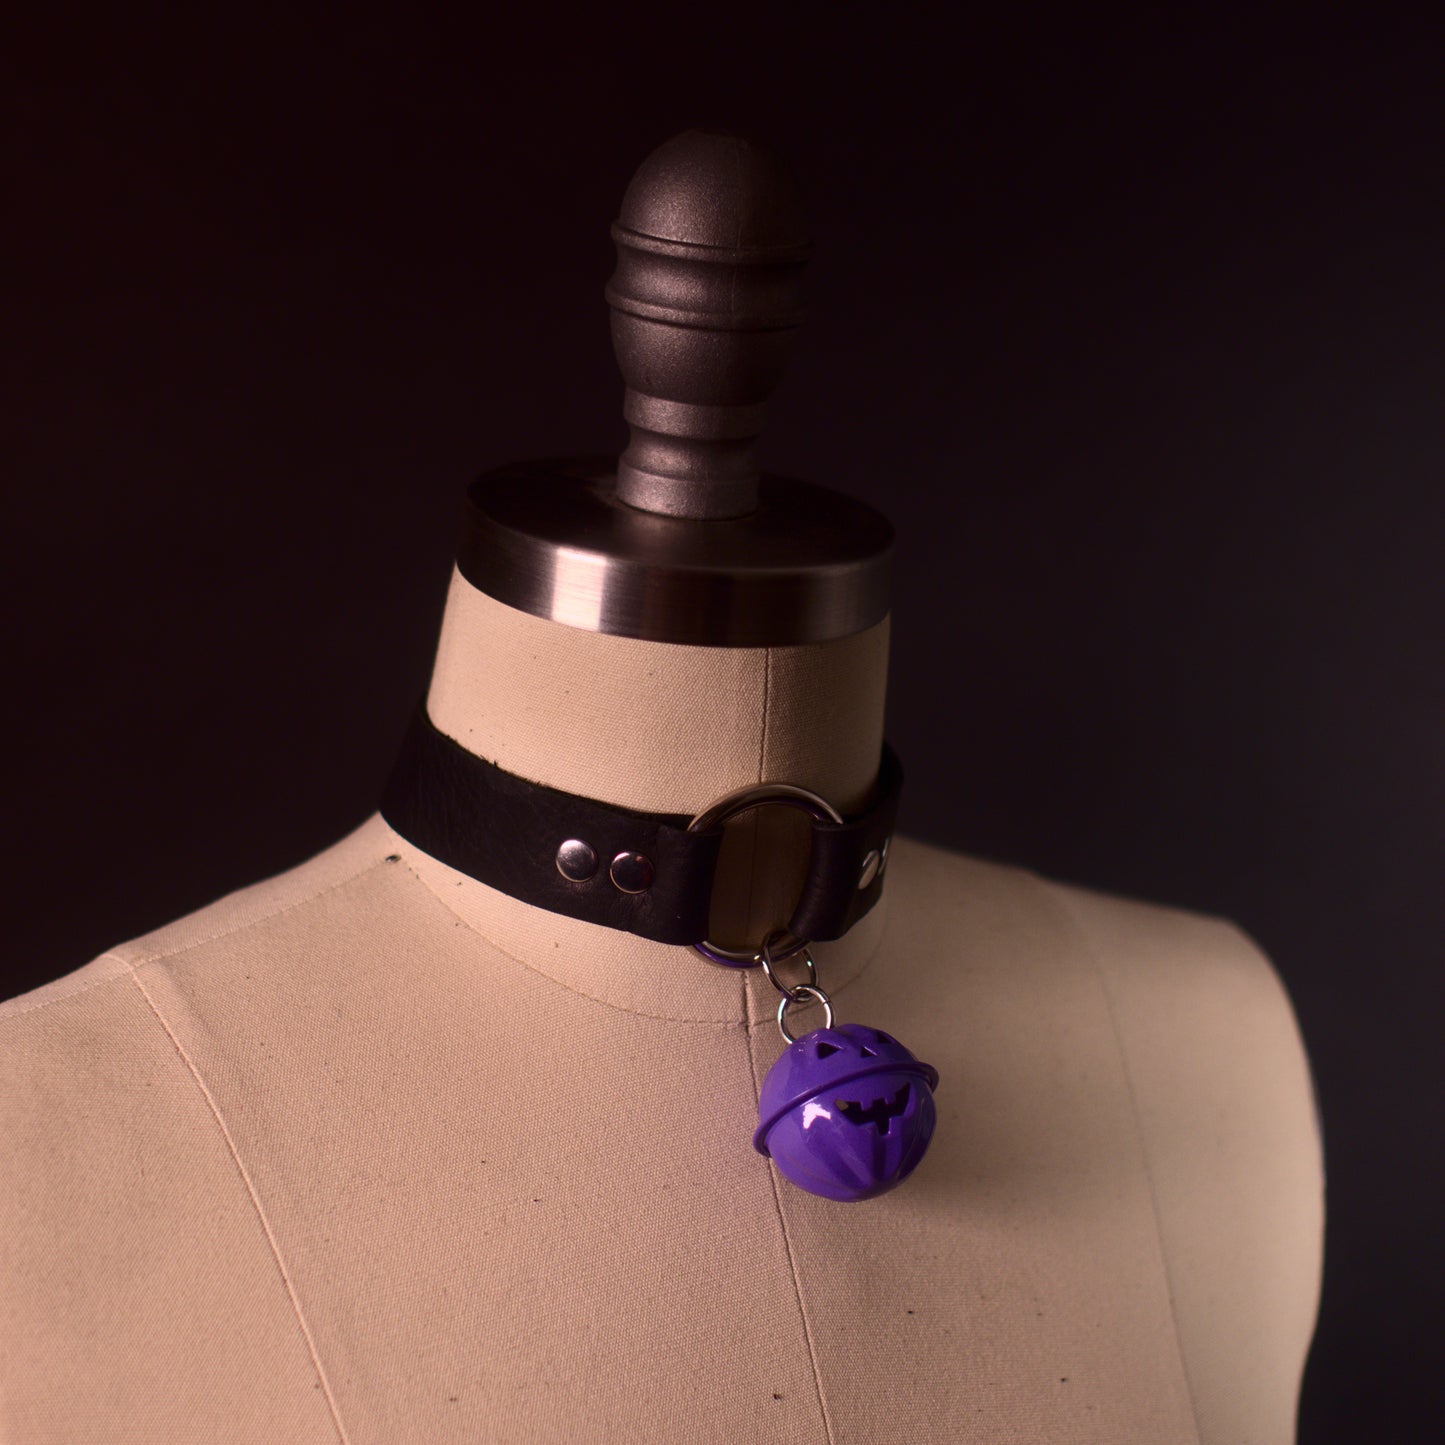 1" O-ring Collar with Jack o Lantern Bell